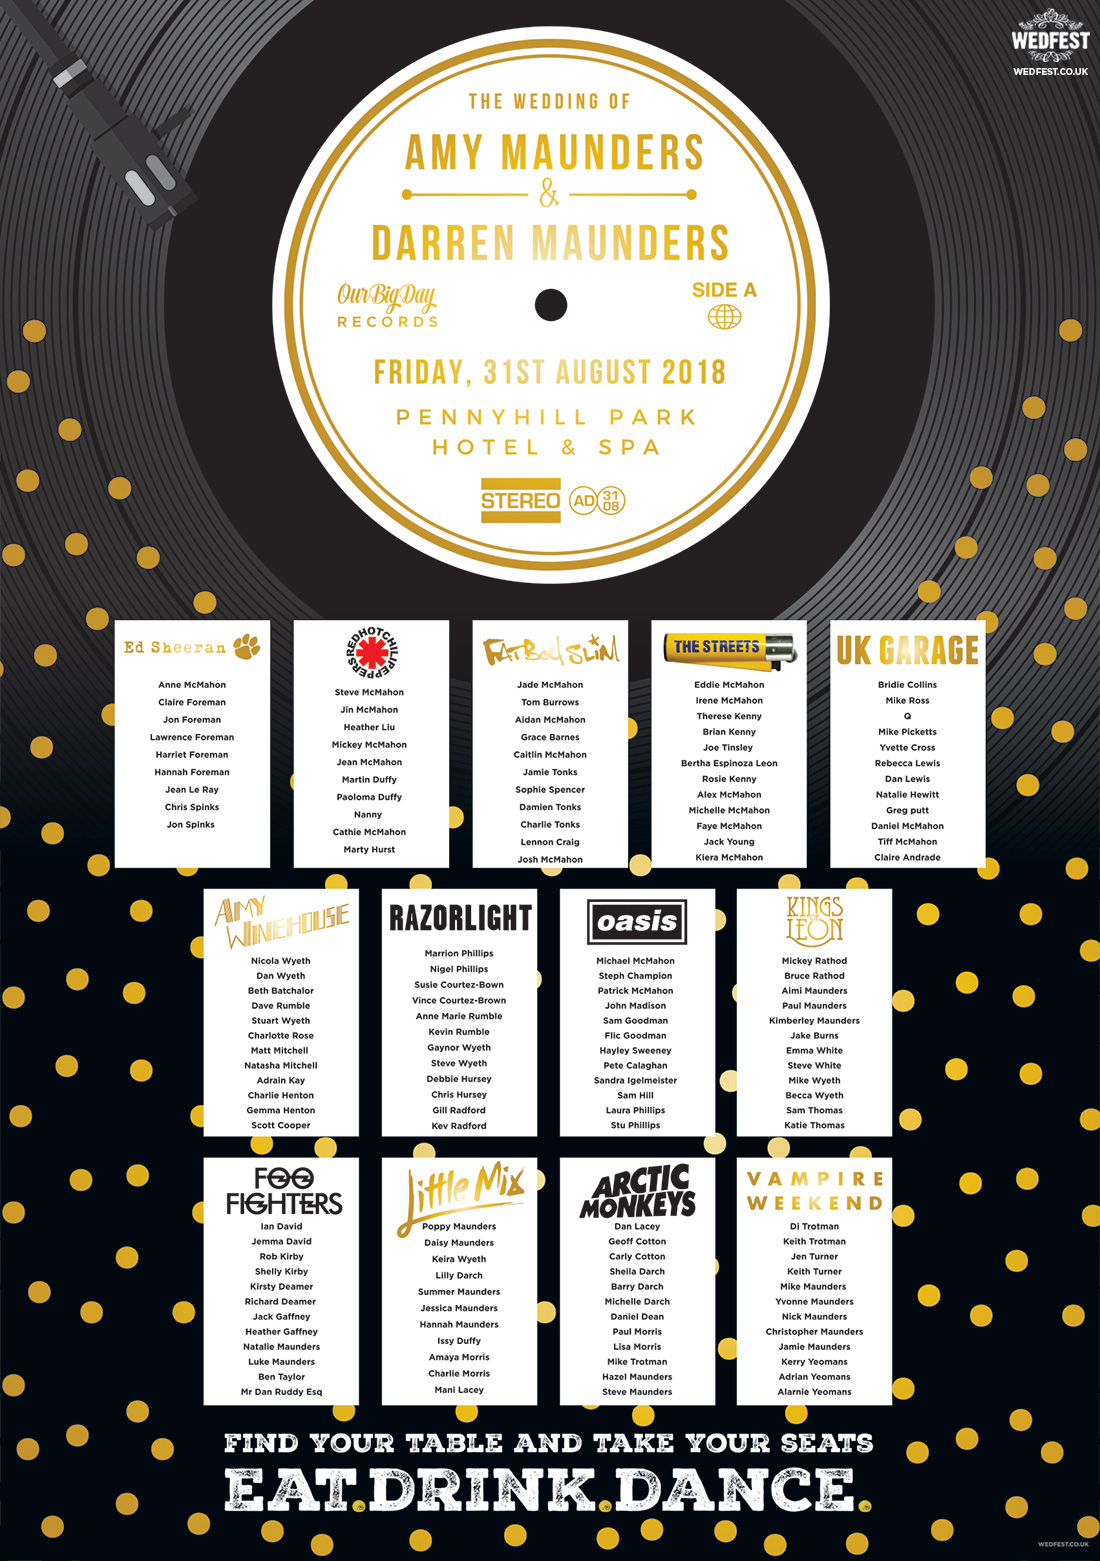 music vinyl records themed wedding table plan